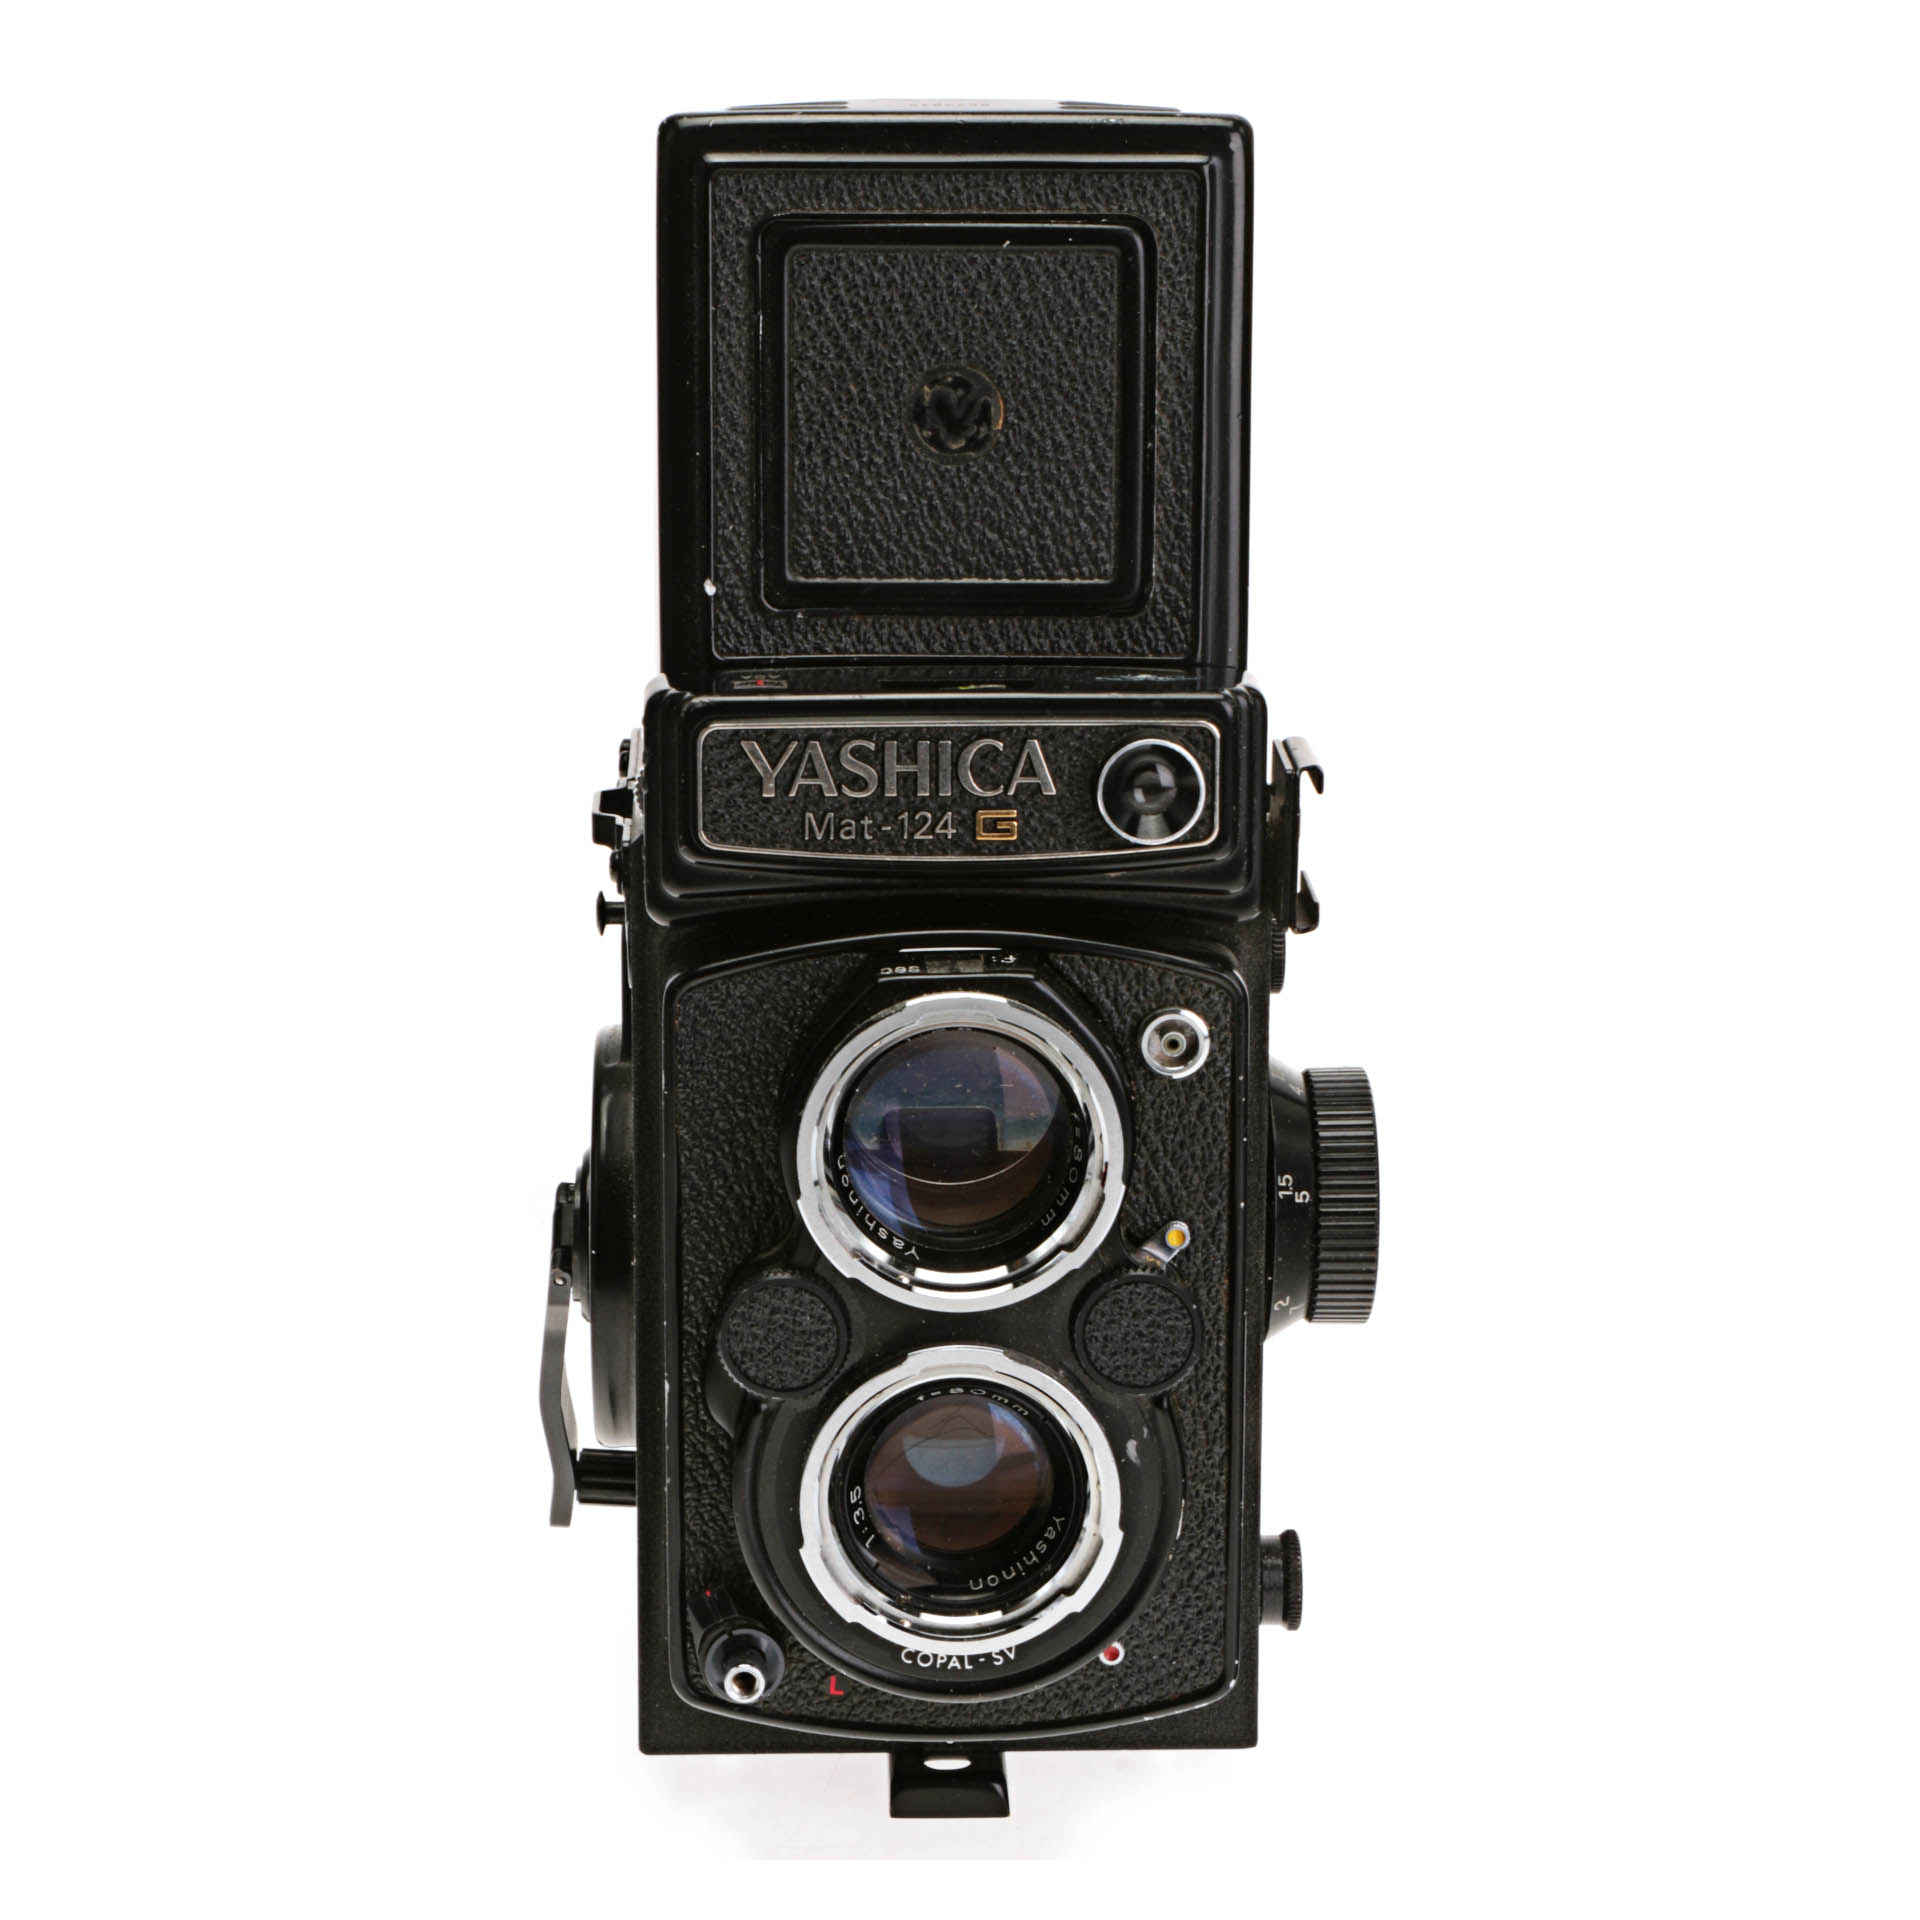 Yashica Mat 124 G Medium Format Film TLR Camera with 80mm F3.5 Yashinon Lens